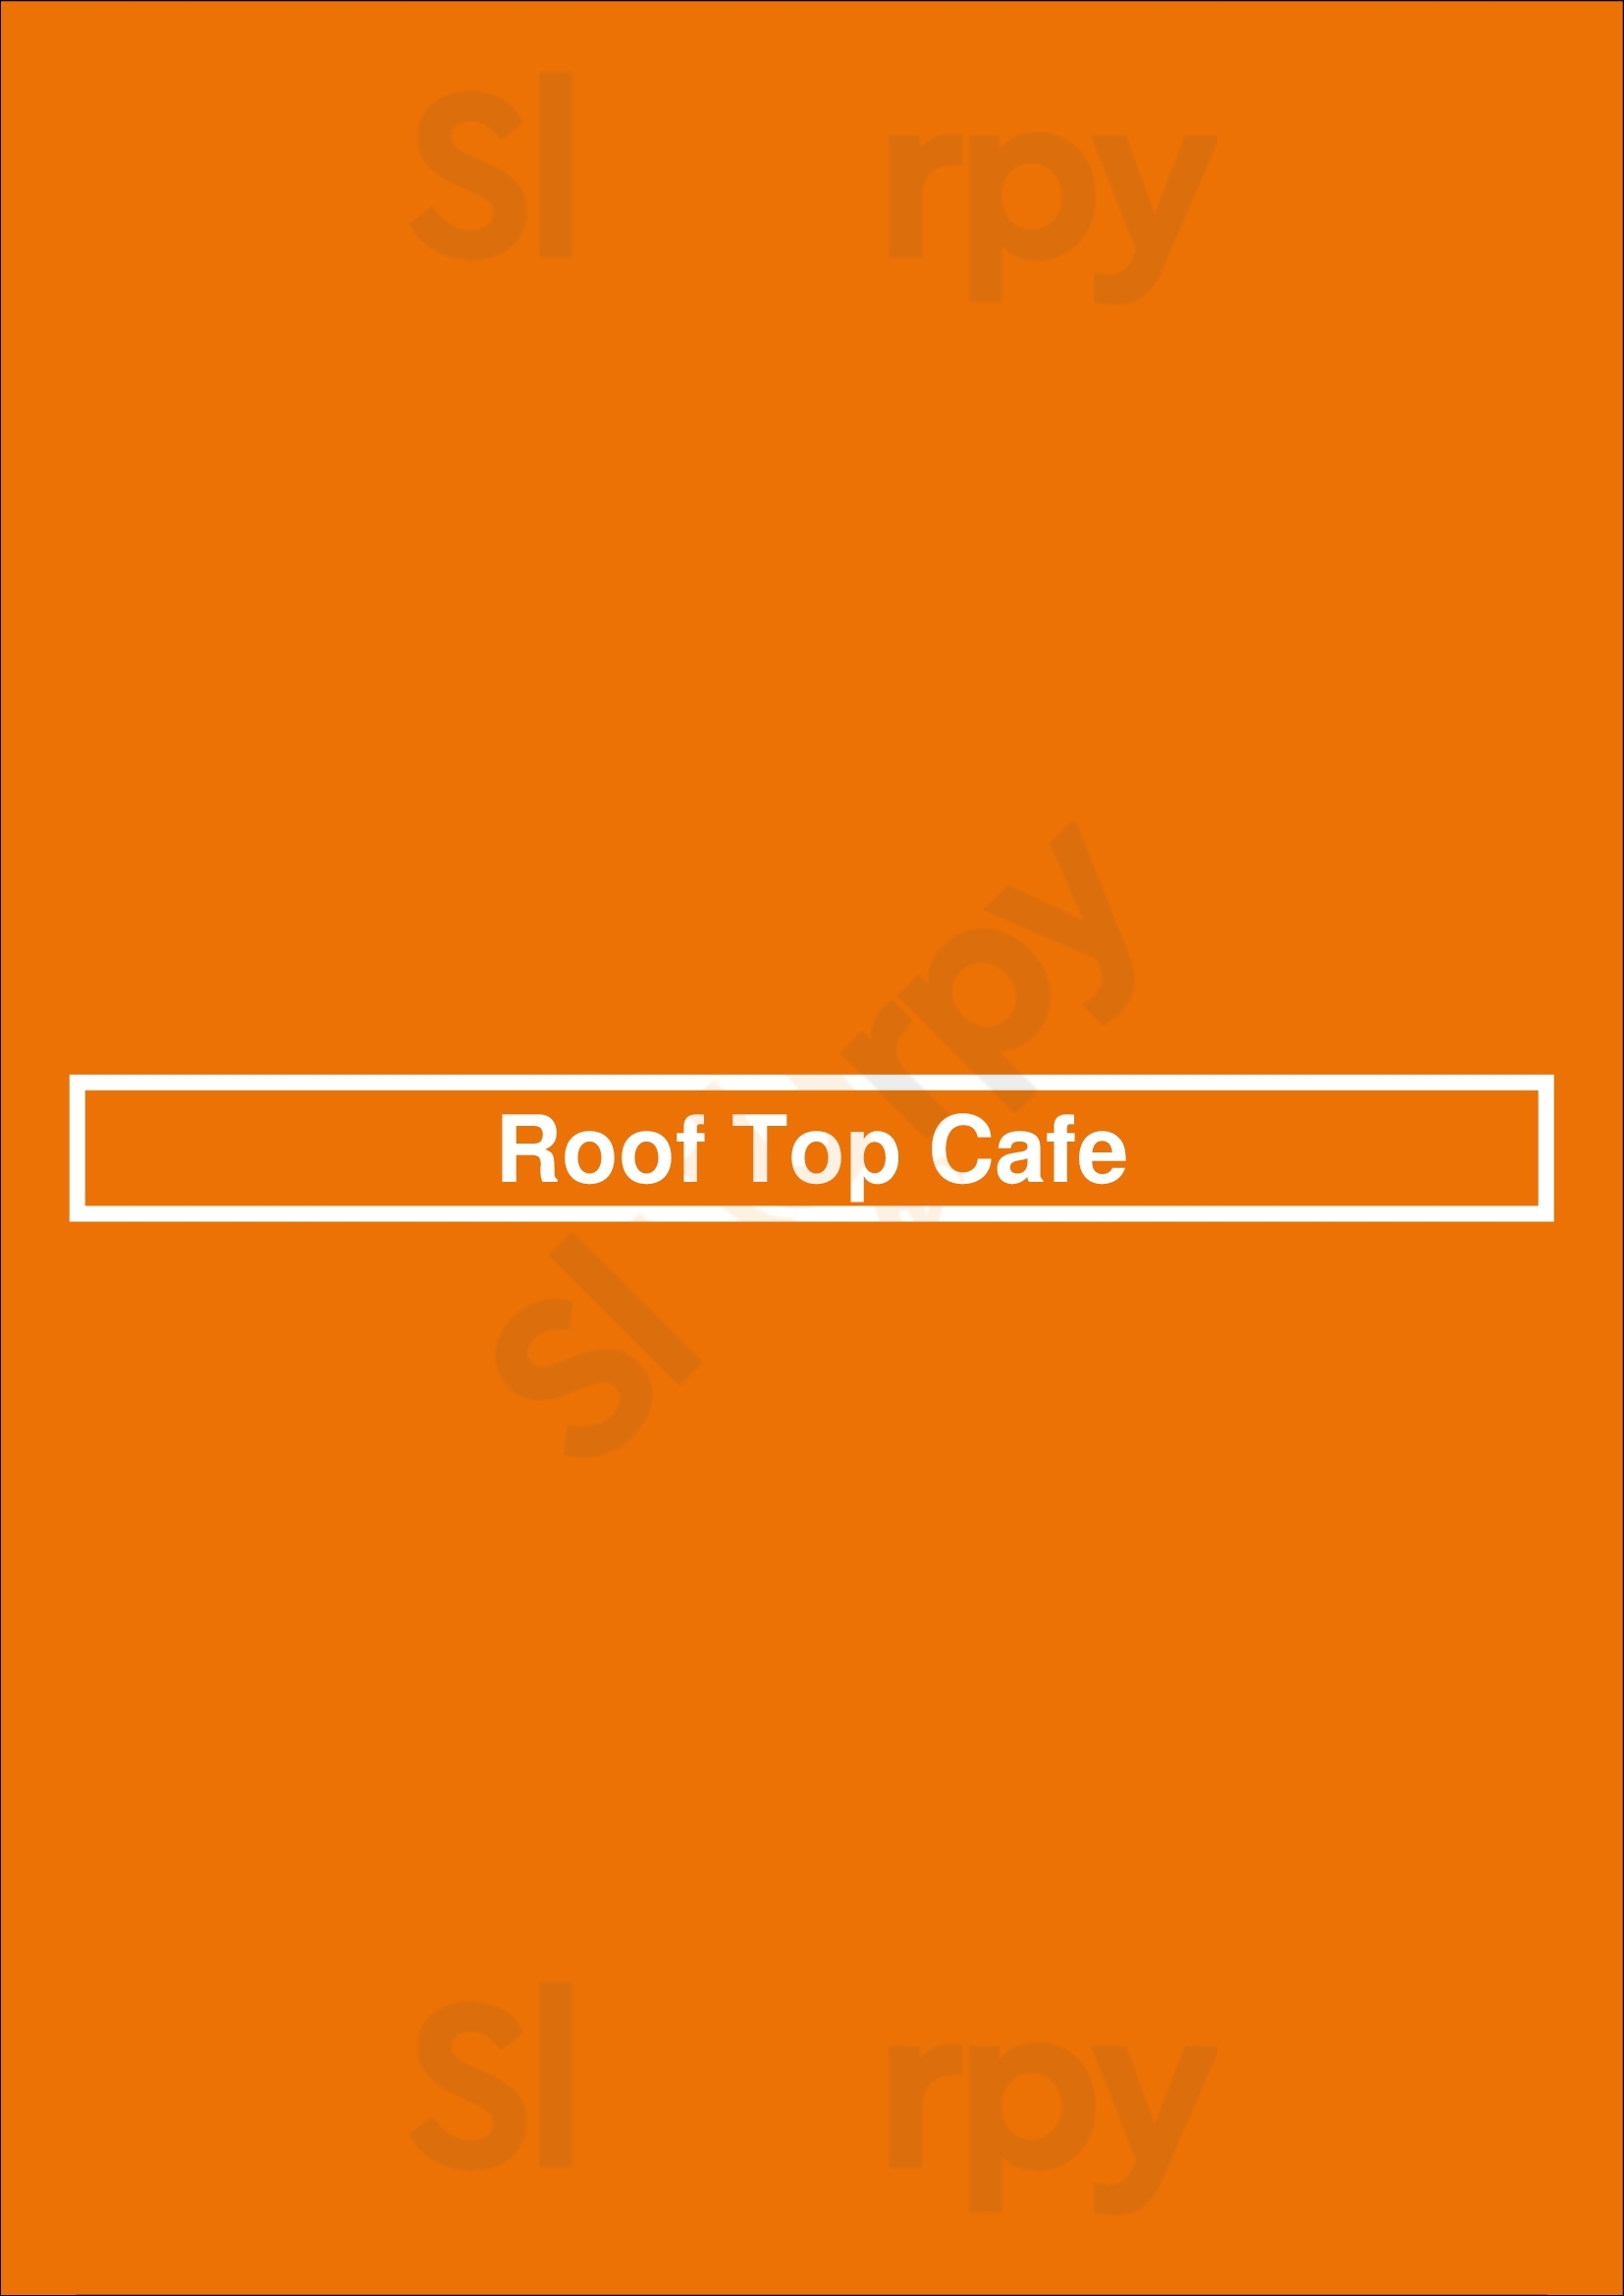 Roof Top Cafe Florida Keys Menu - 1